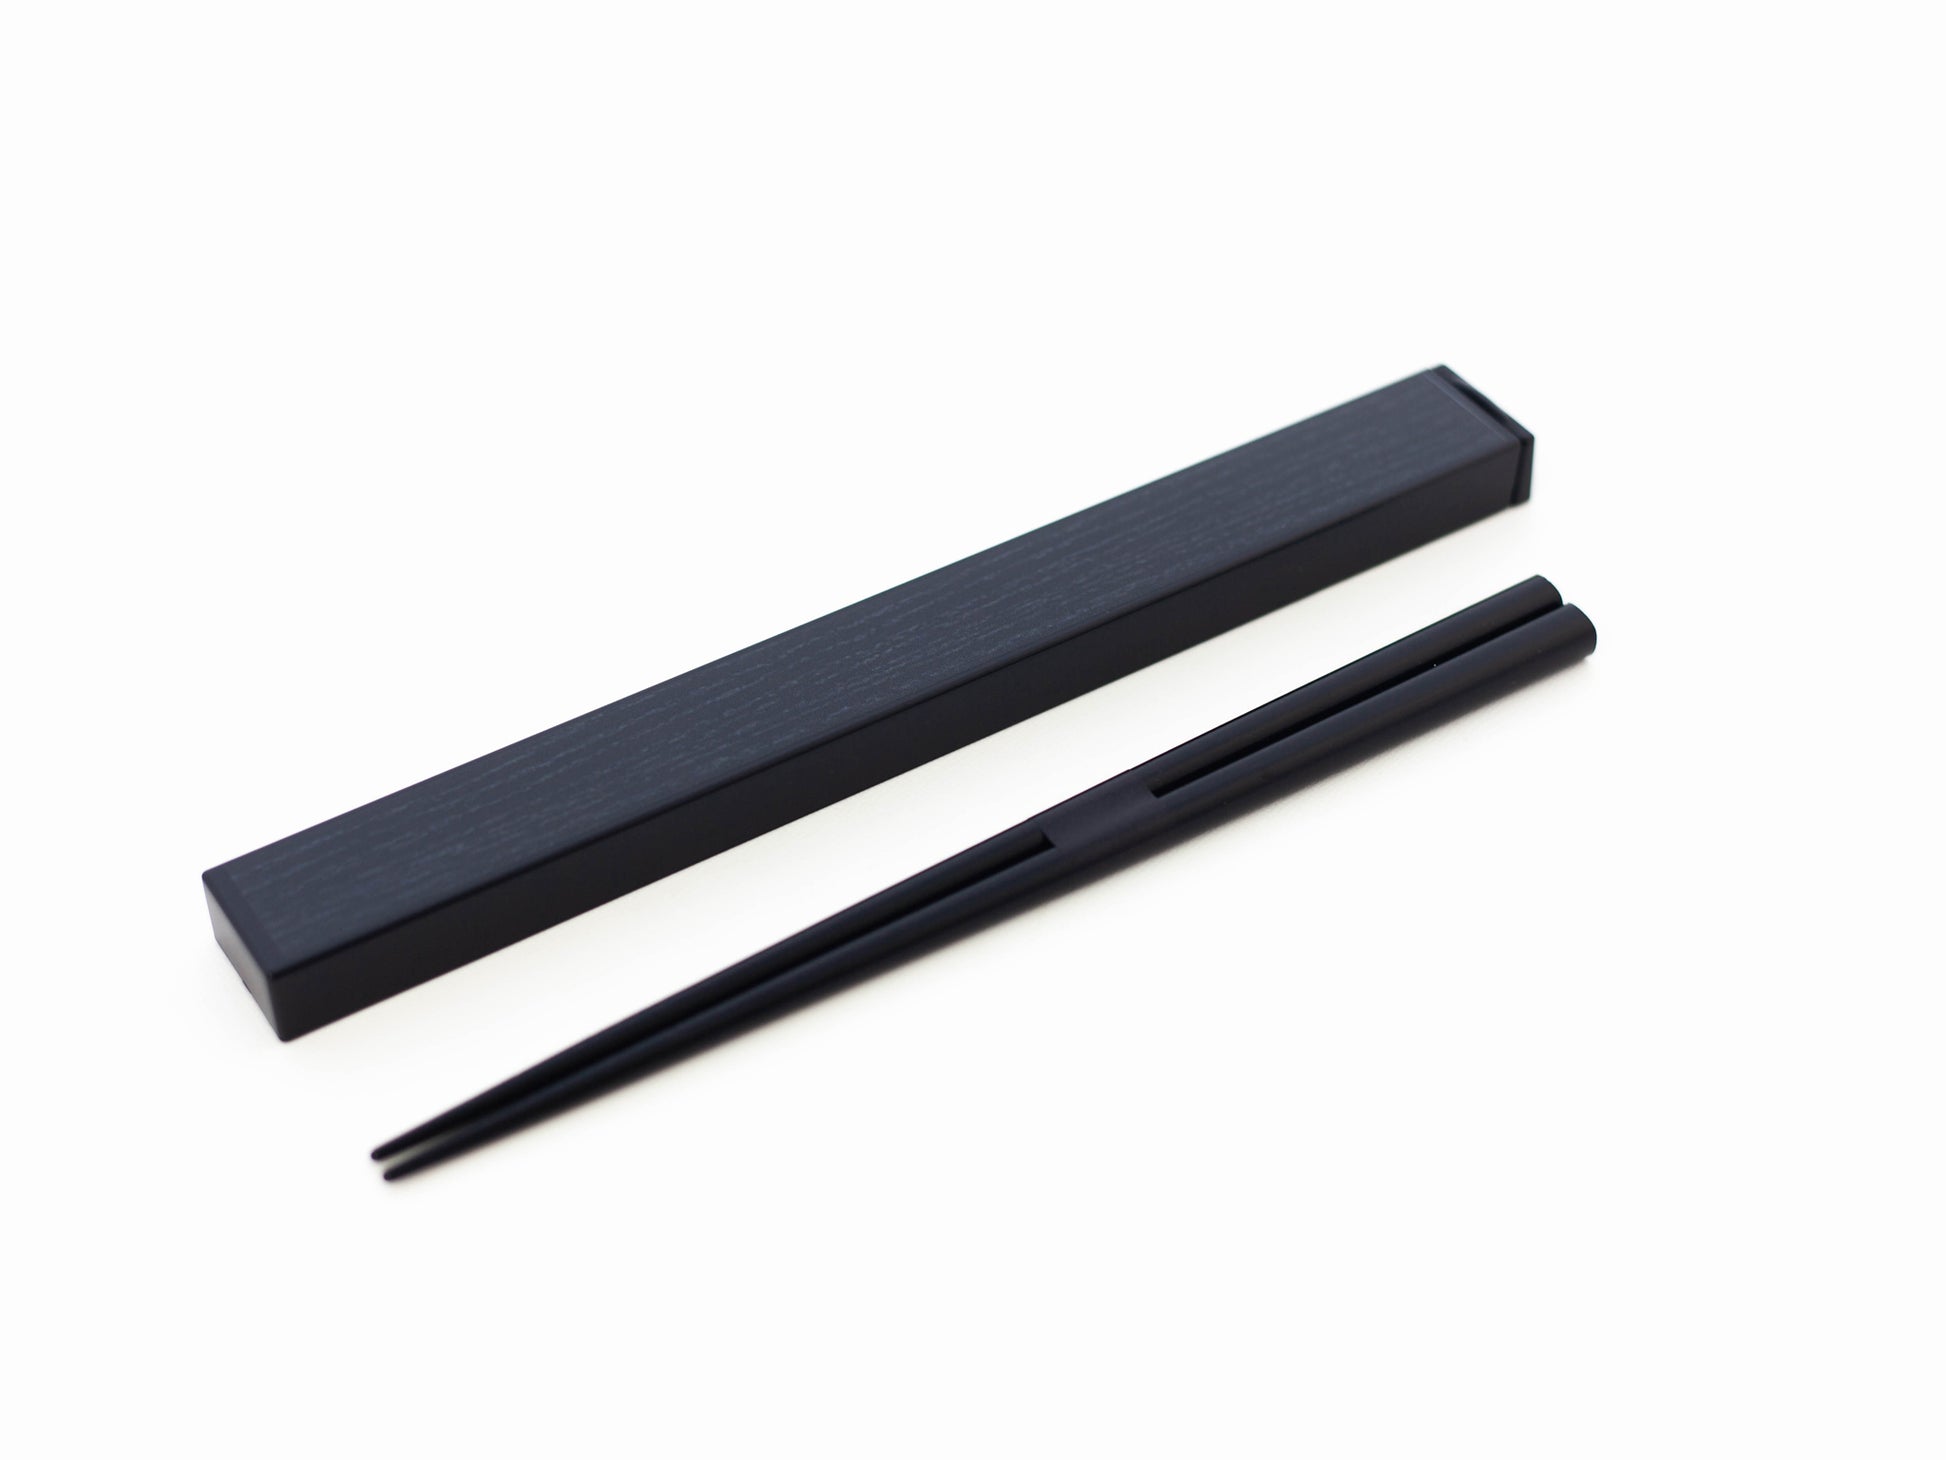 Woodgrain Chopsticks Set 21cm | Black by Hakoya - Bento&co Japanese Bento Lunch Boxes and Kitchenware Specialists